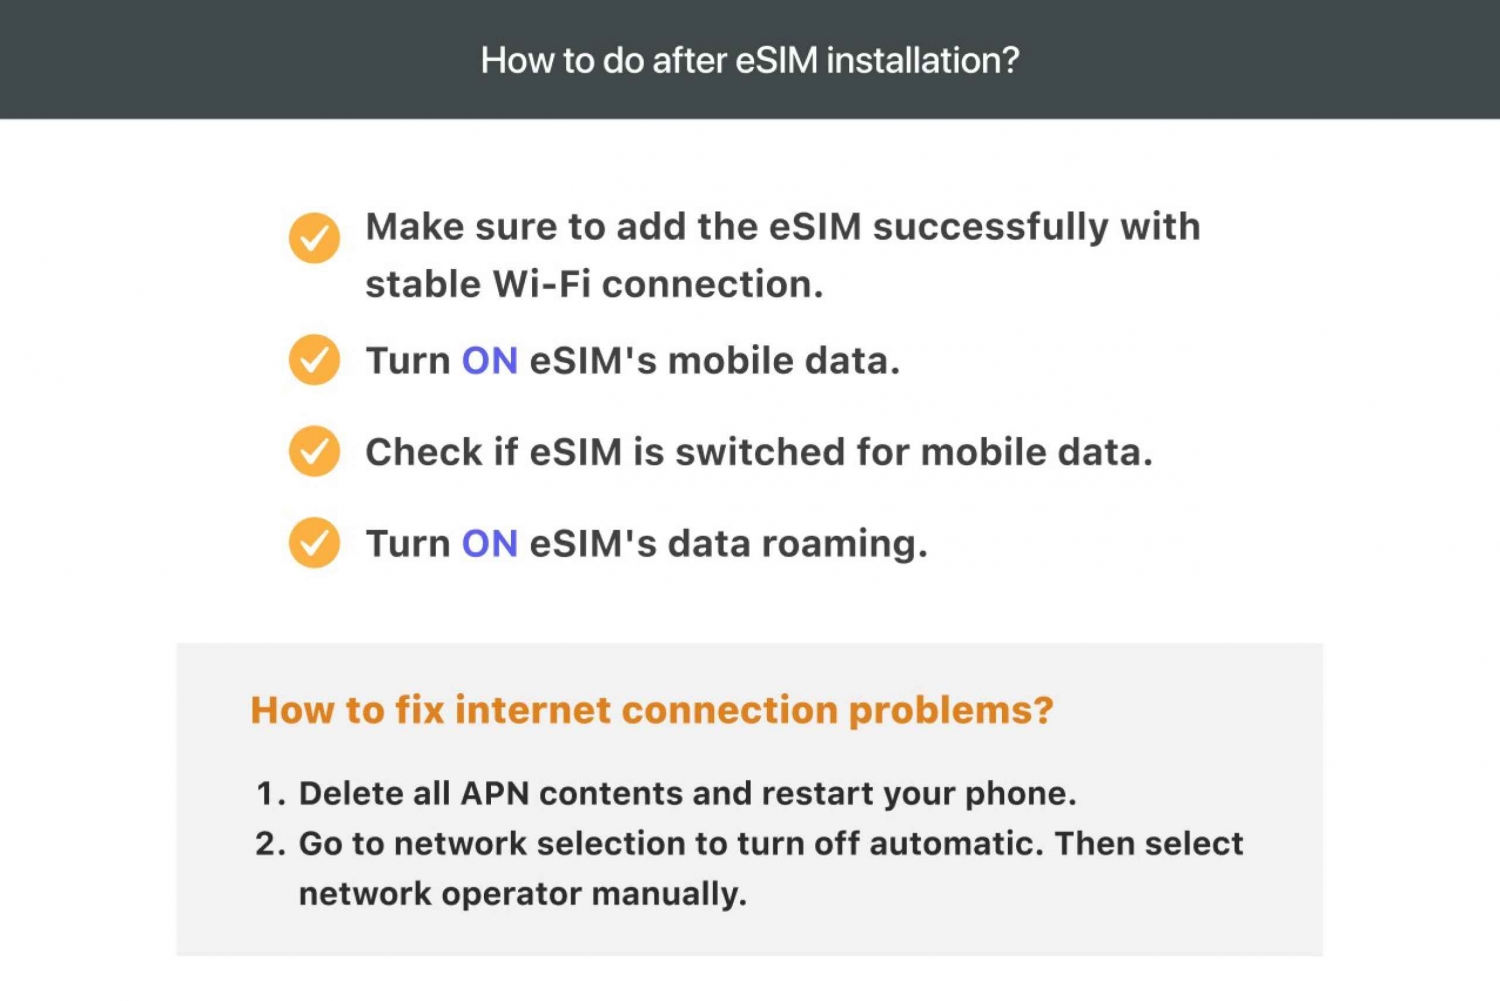 Australia: eSIM Mobile Data Plan with New Zealand Coverage